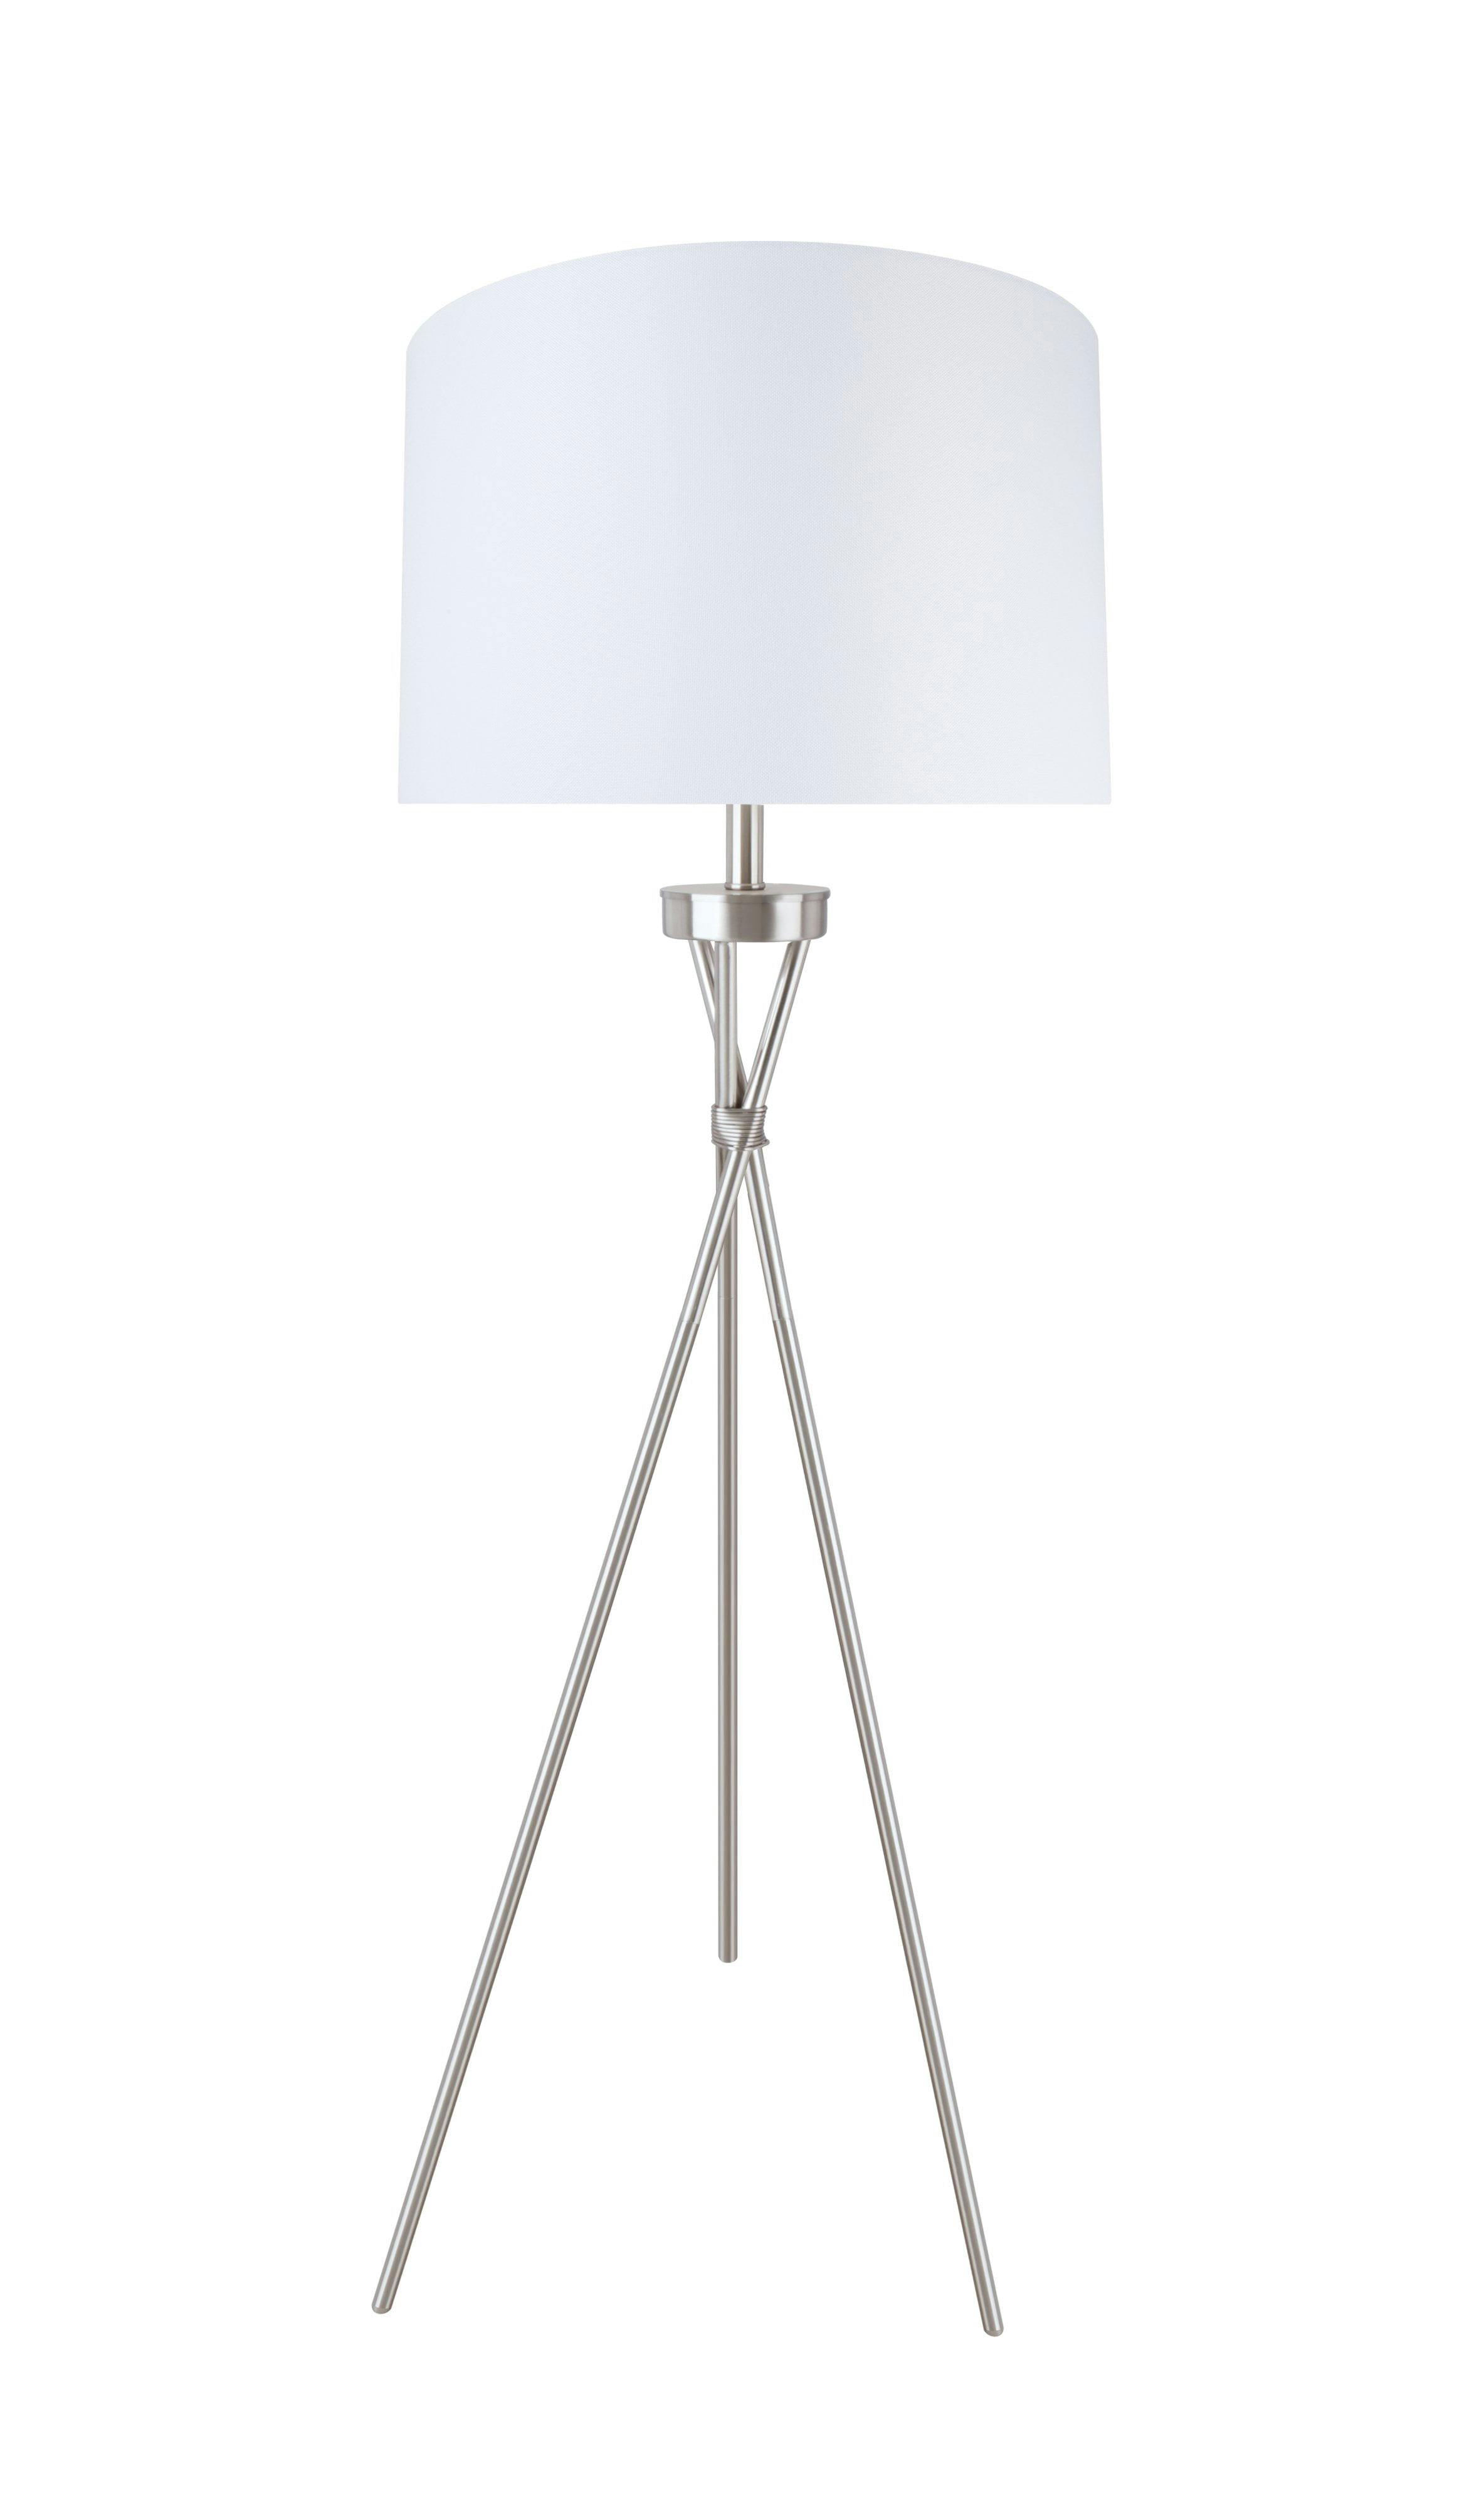 Satin Nickel Tripod Floor Lamp with Adjustable Height